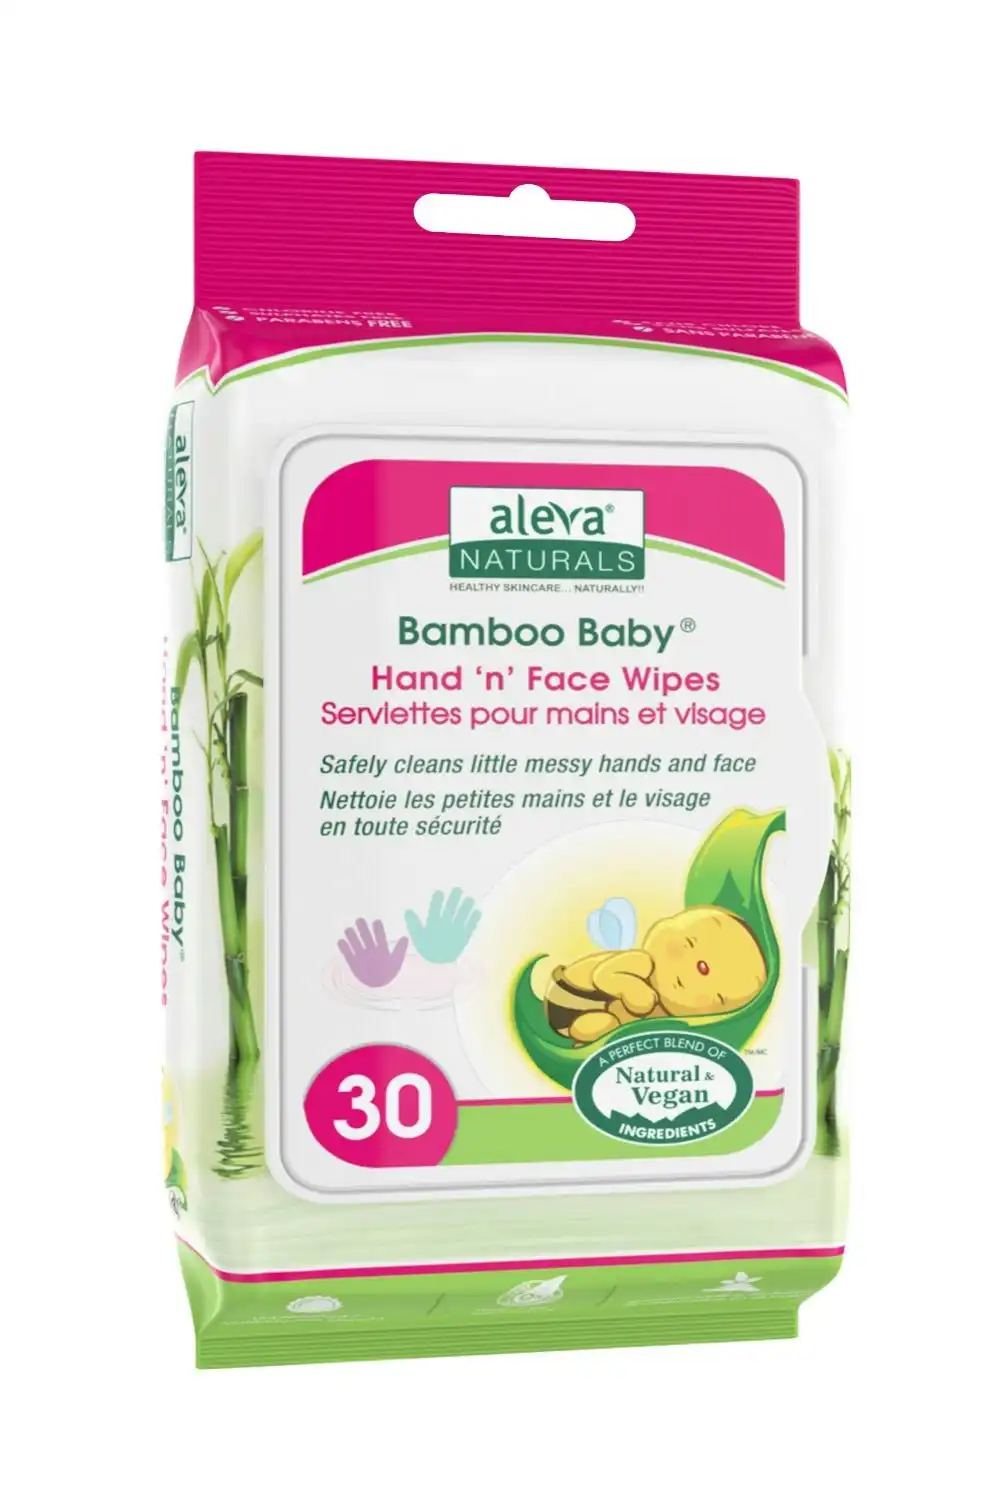 Aleva Organic/Vegan/Natural Bamboo Baby Hand 'n' Face Wipes - 30ct